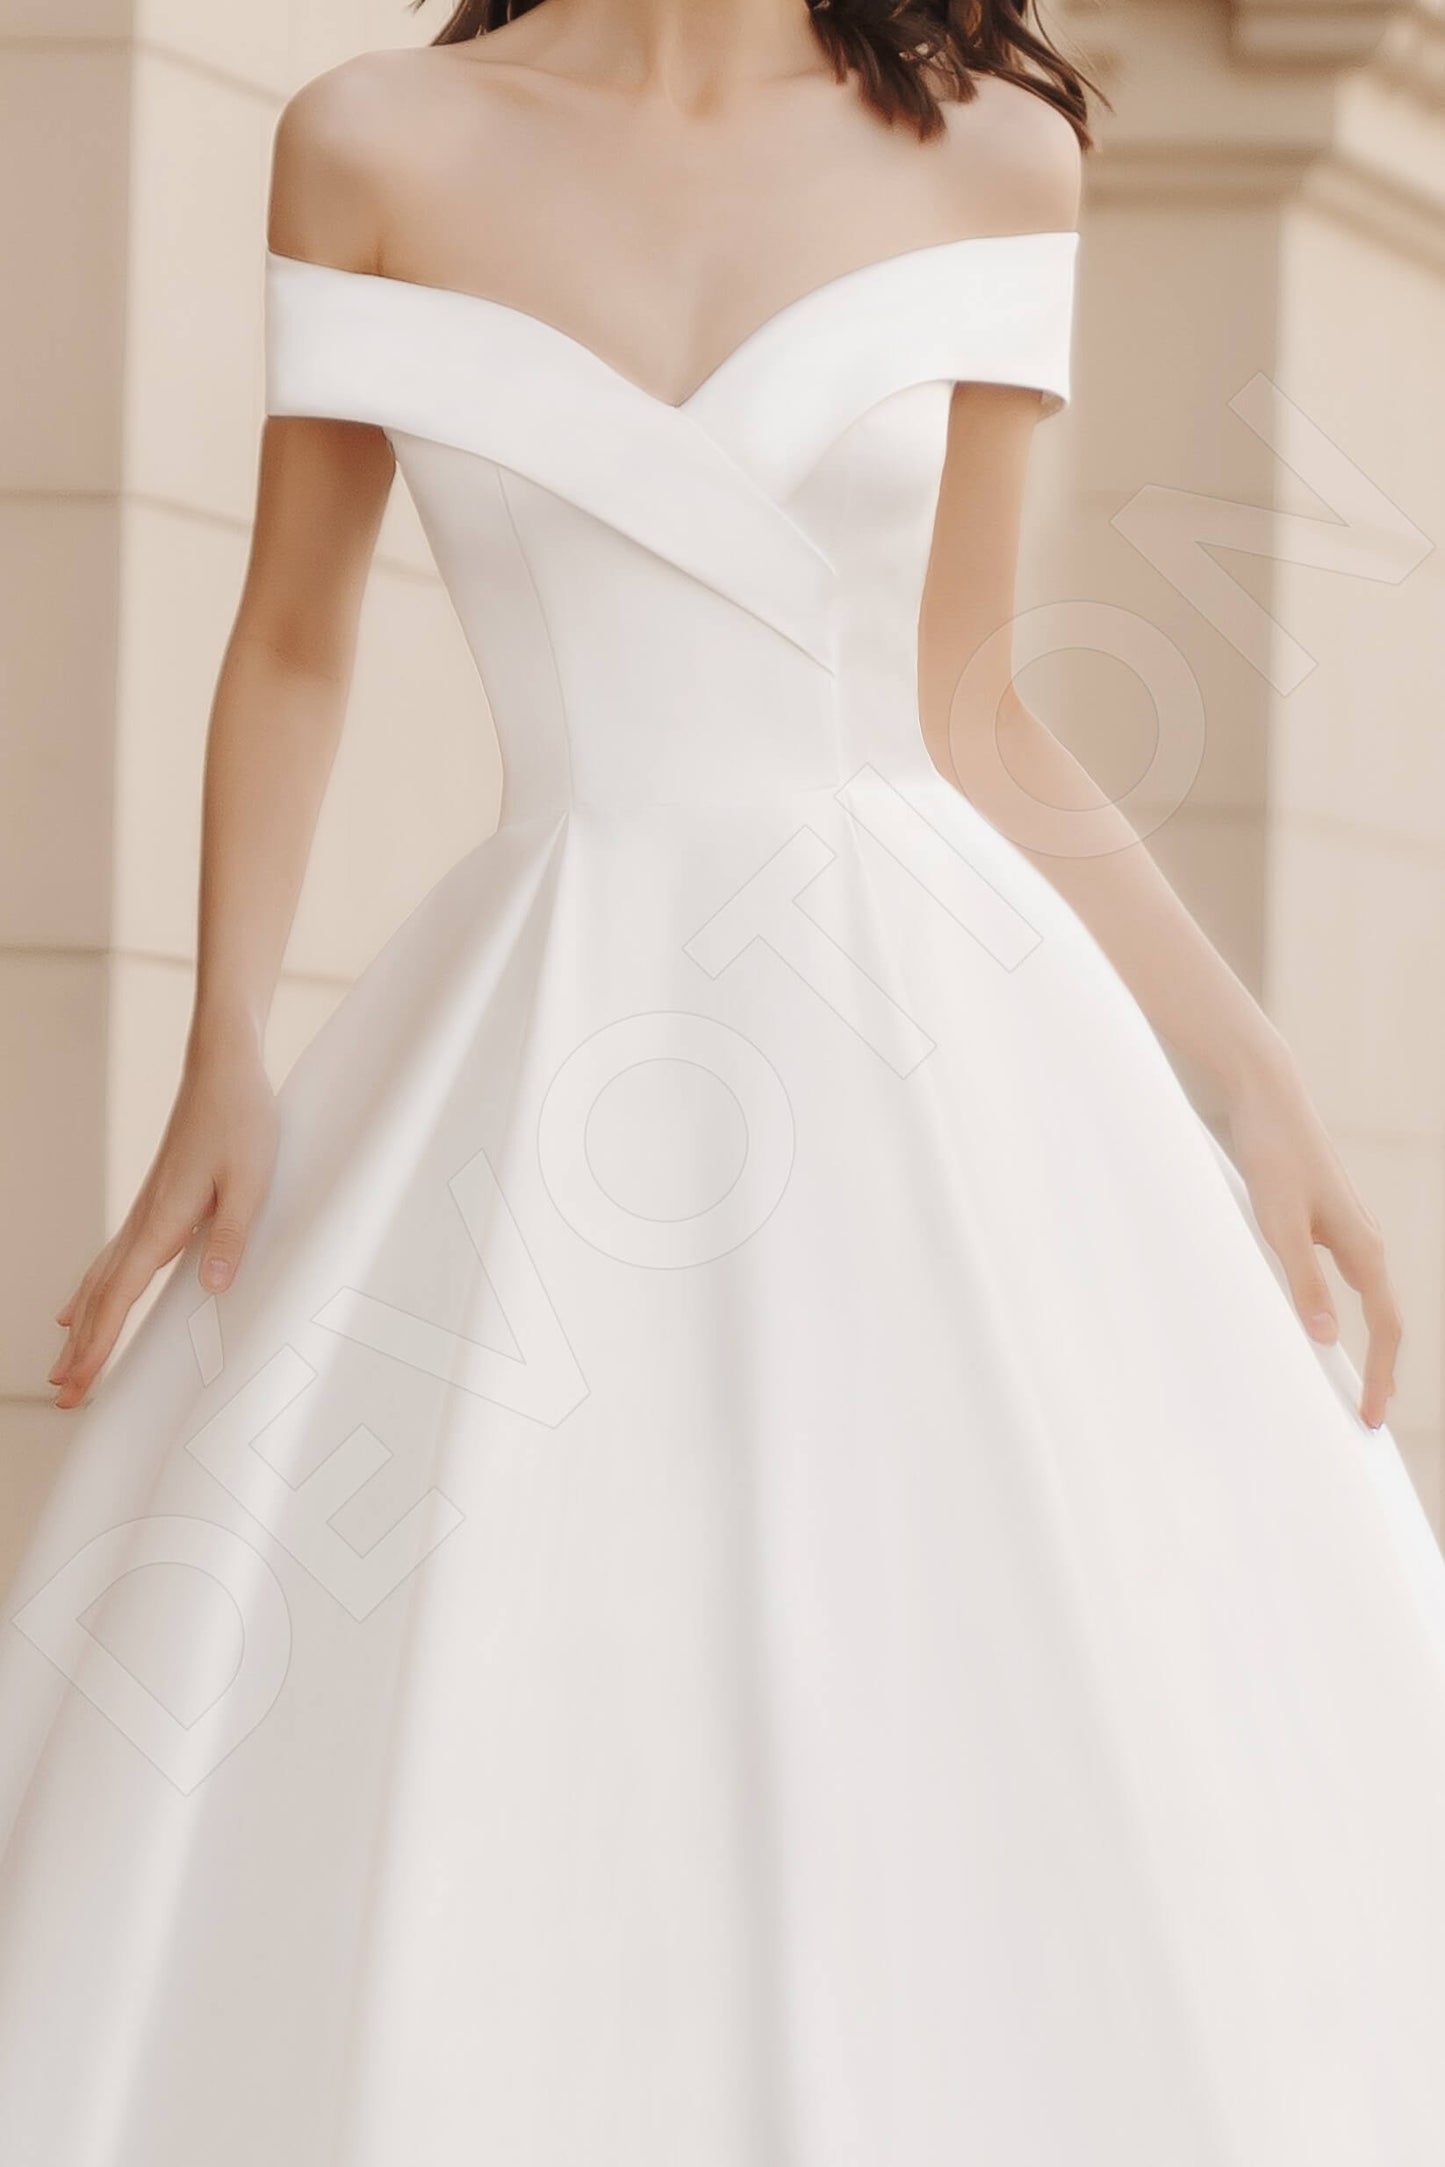 Beatris Full back Princess/Ball Gown Sleeveless Wedding Dress 2